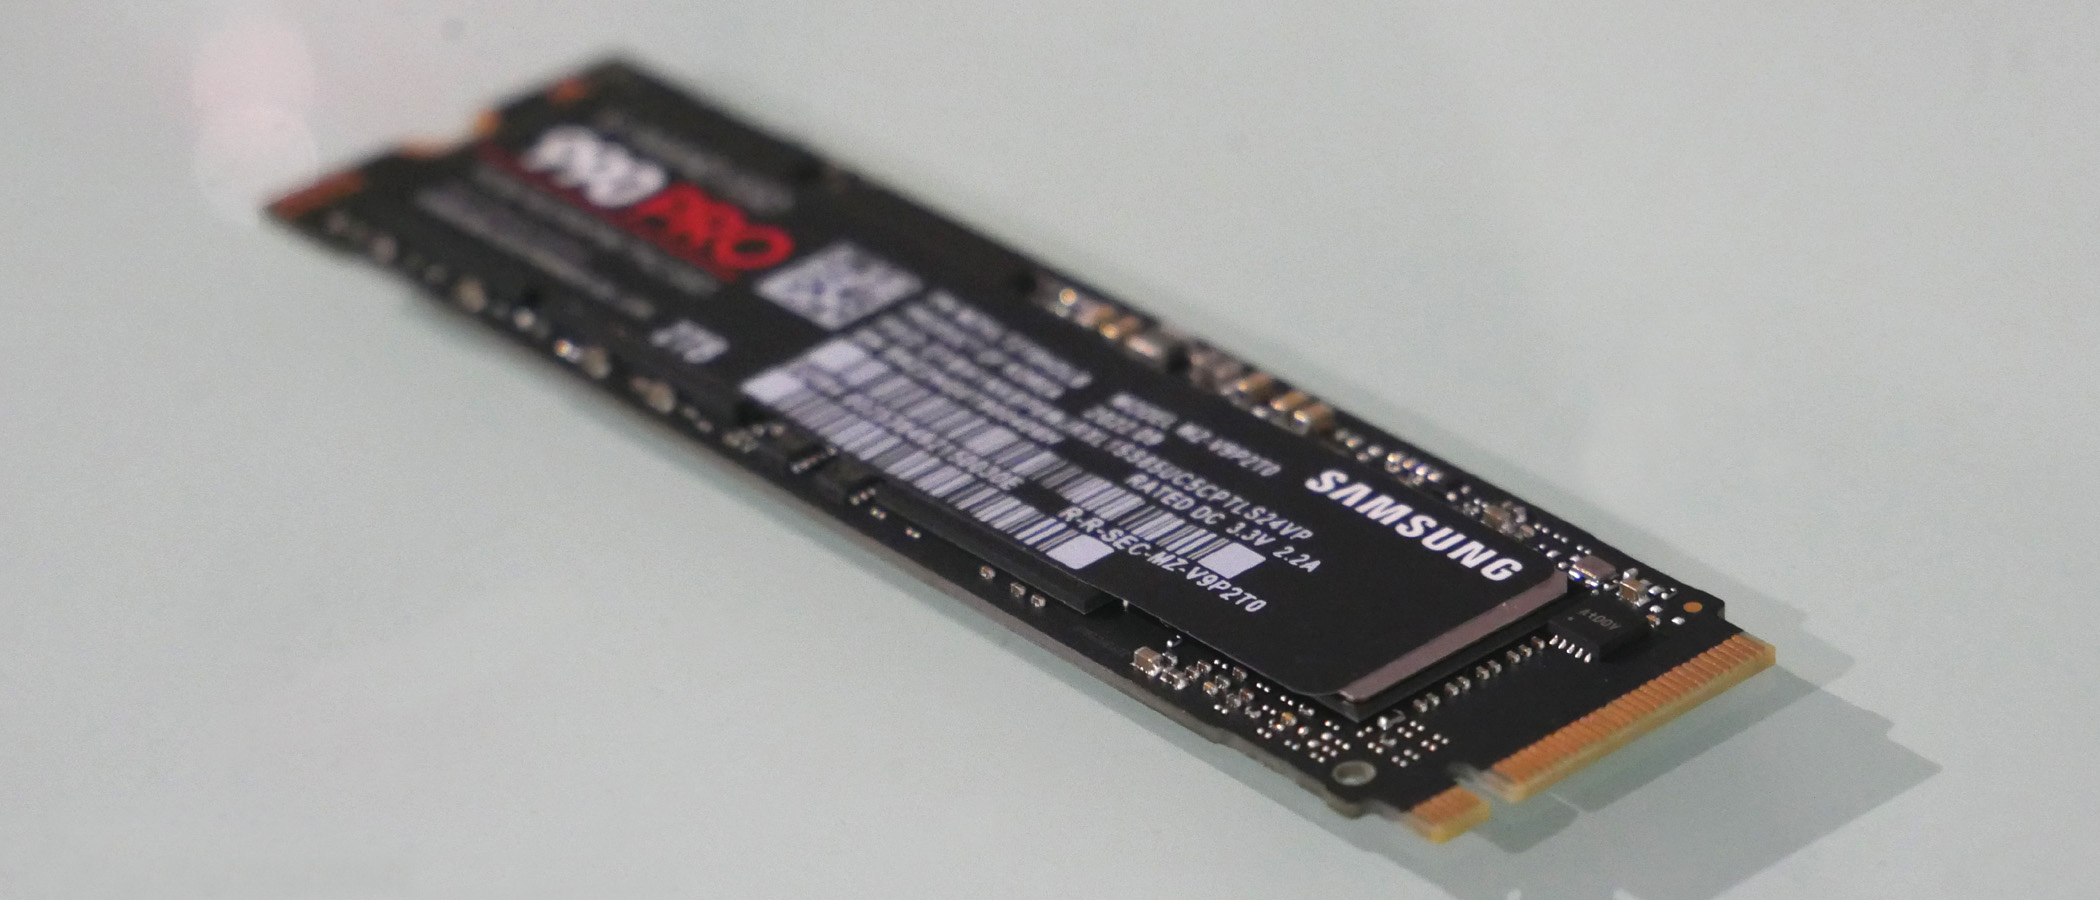 990 PRO PCIe<sup>®</sup> 4.0 NVMe<sup>®</sup> SSD 1TB